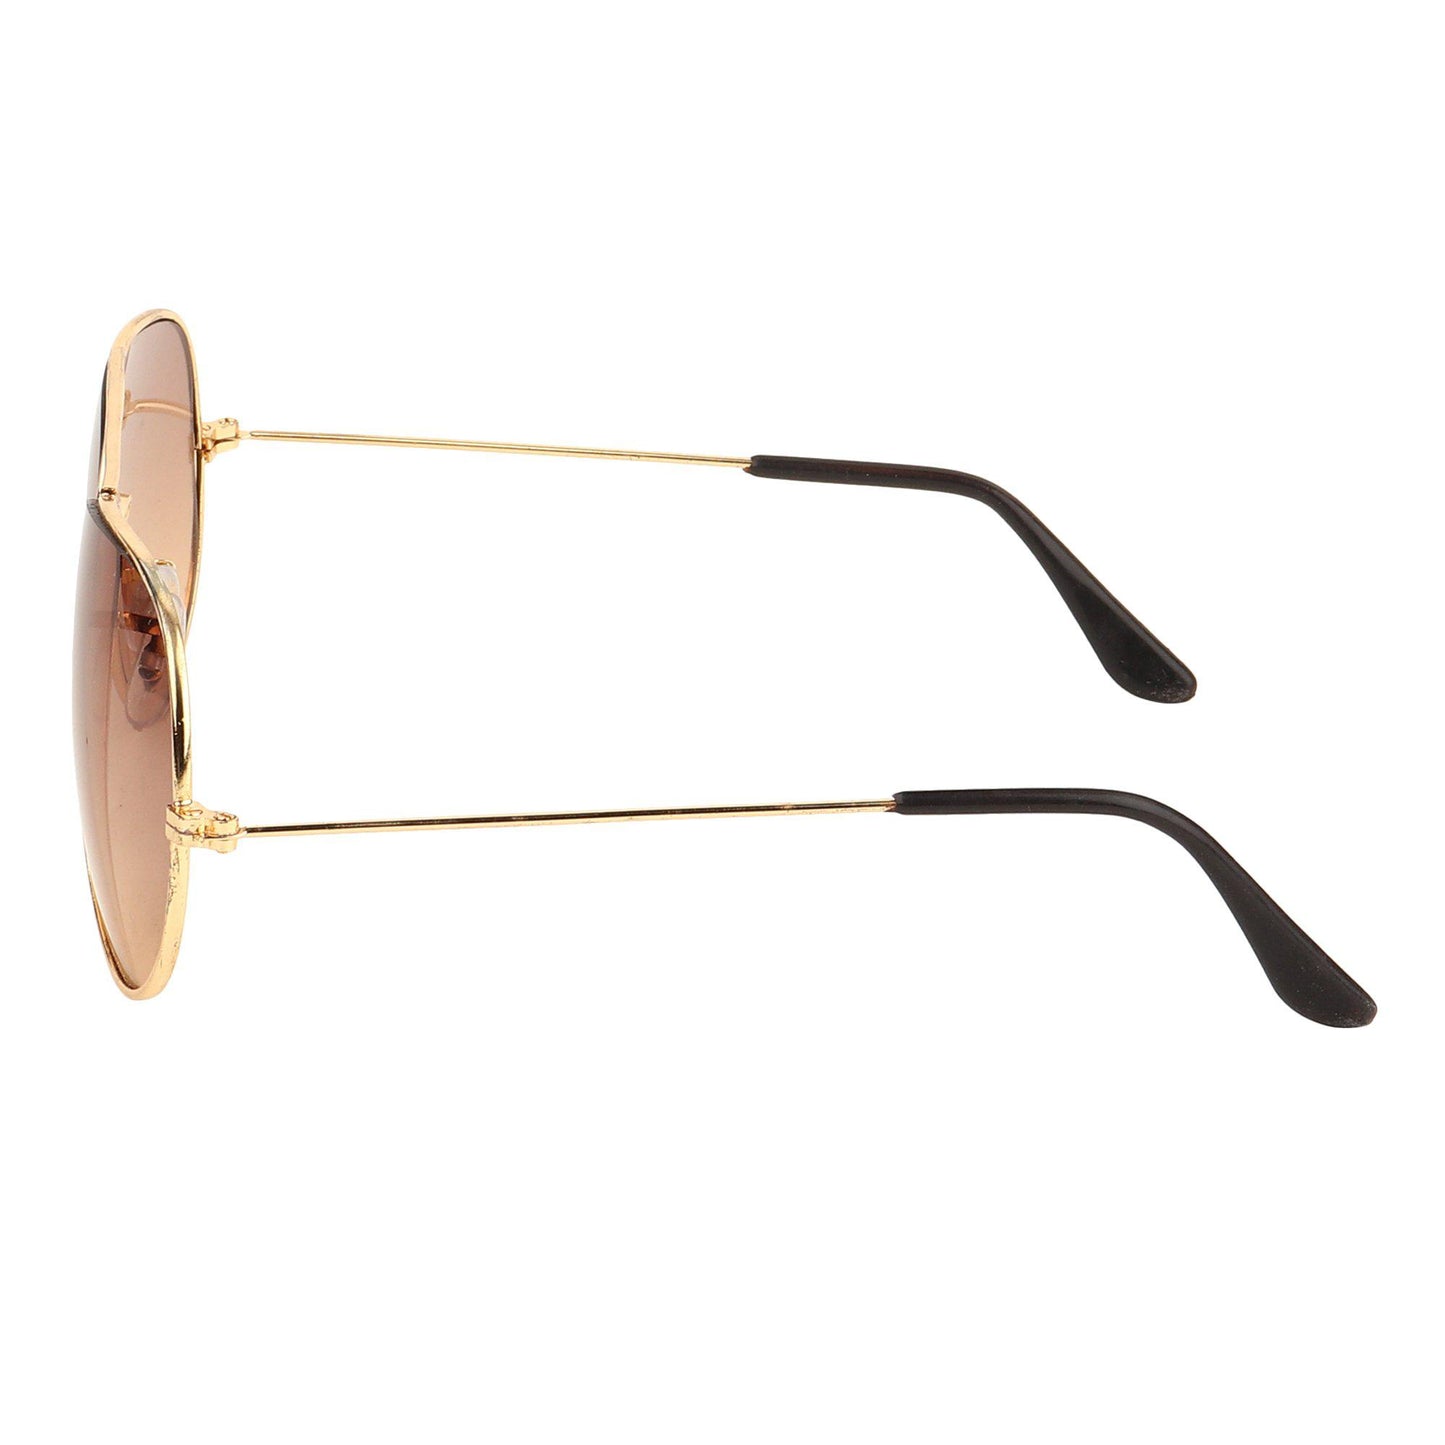 Stylish Avaitor Sunglasses